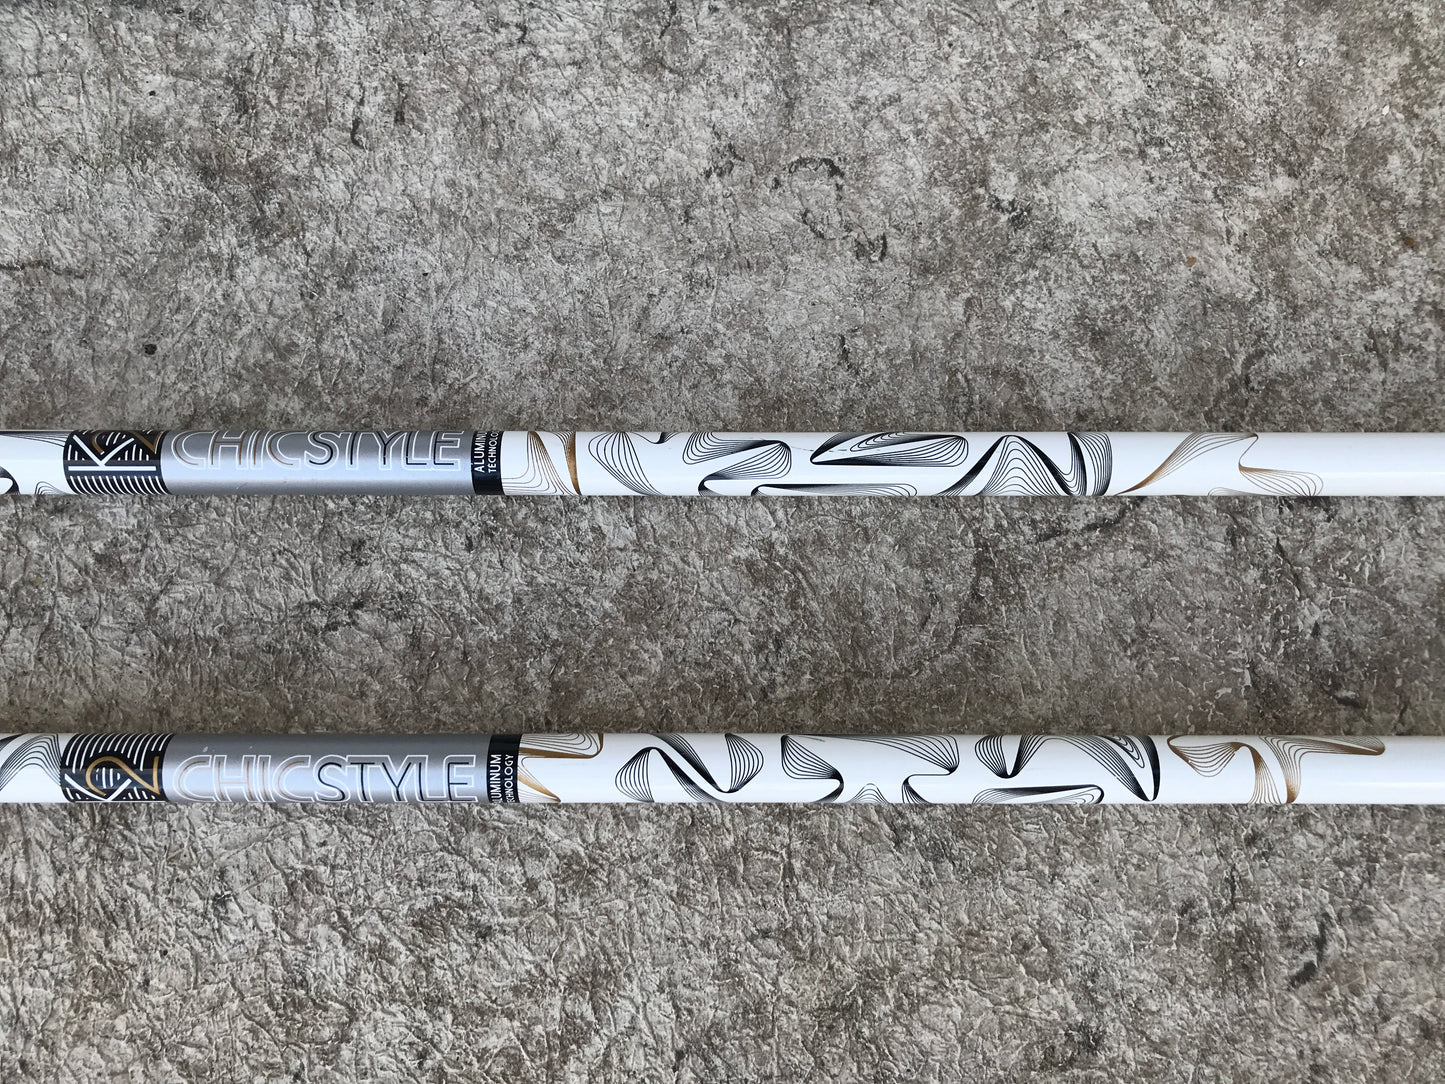 Ski Poles 46 inch 115 cm K-2 Chic Style White Grey Rubber Handles Like New